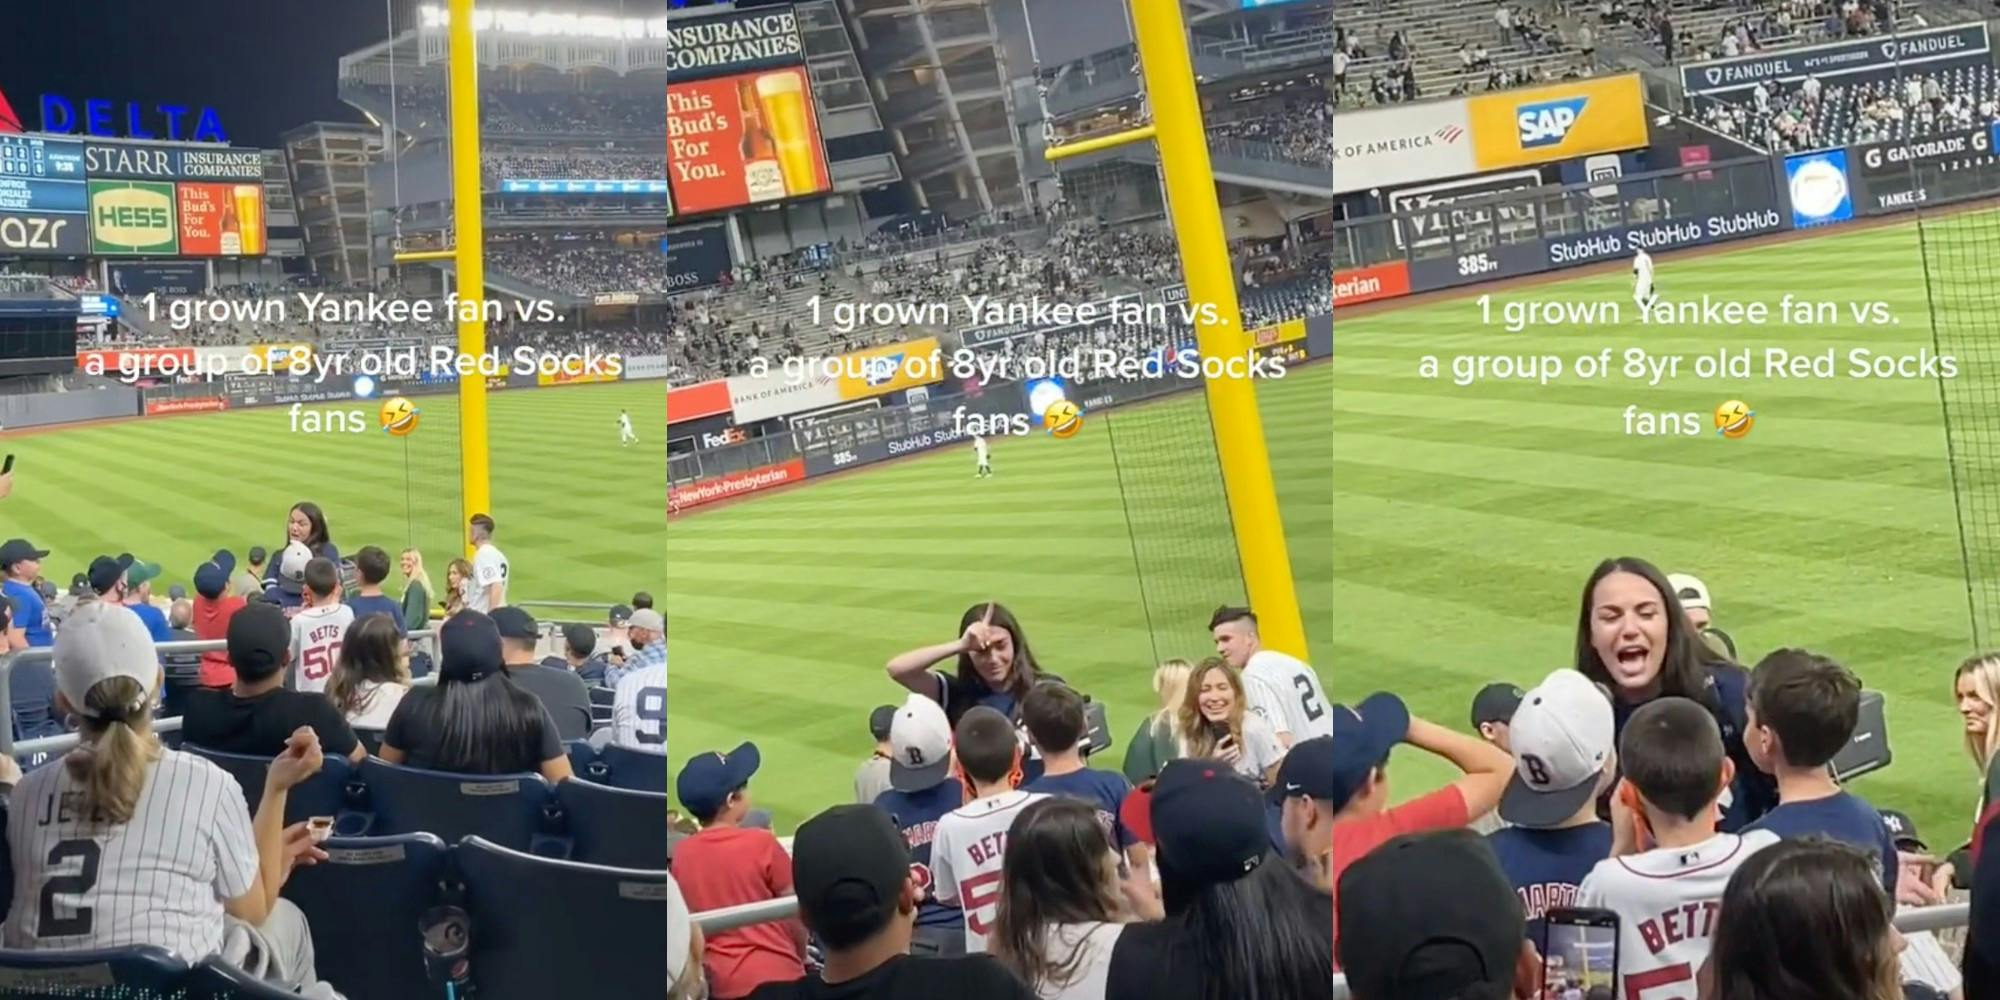 Baseballer - This fan was repping his teams tonight at Yankee Stadium 😂